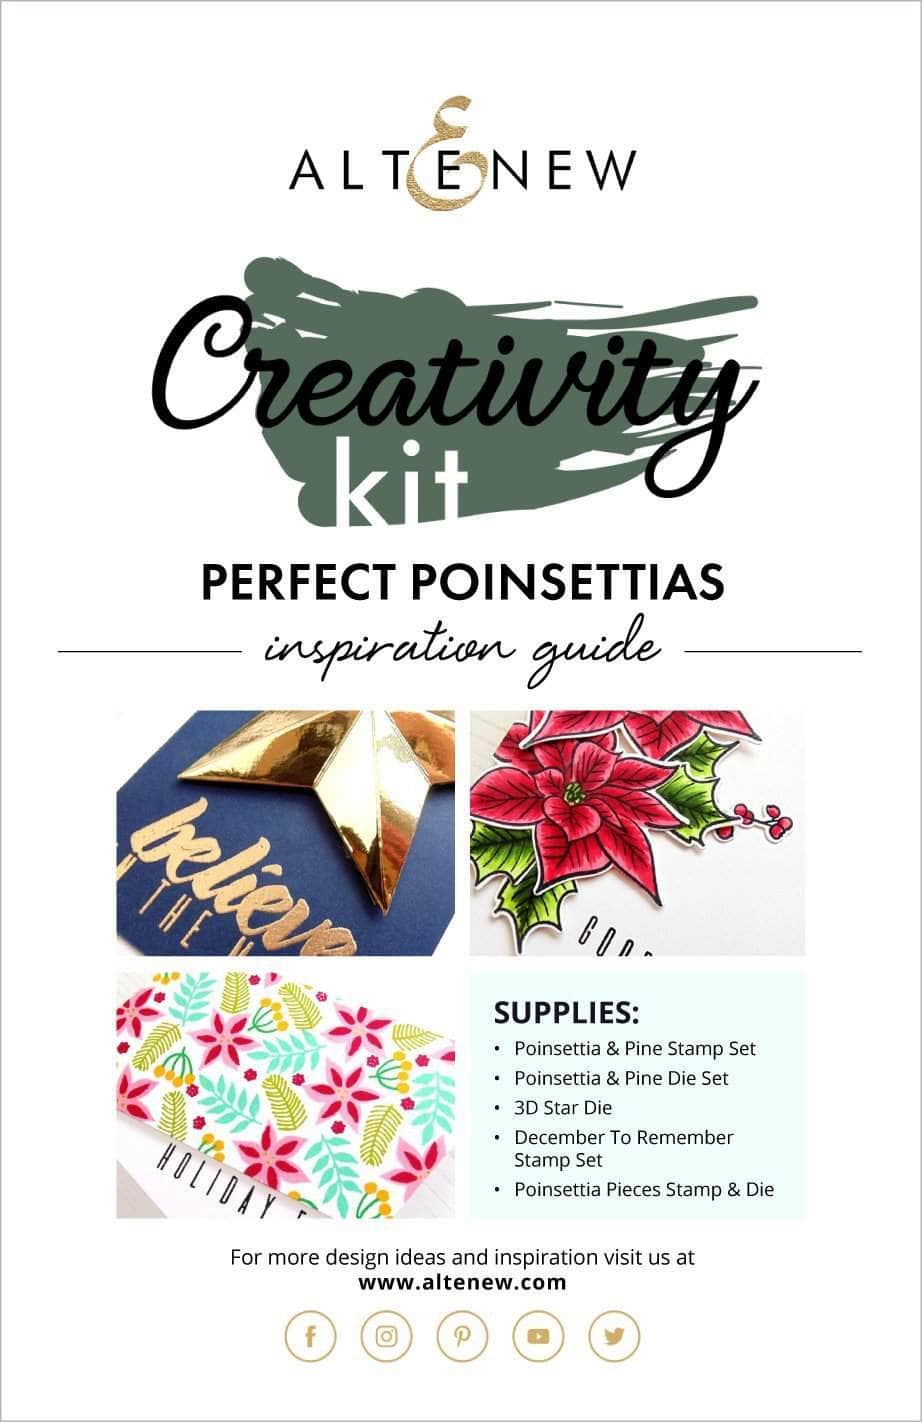 Printed Media Perfect Poinsettias Creativity Kit Inspiration Guide